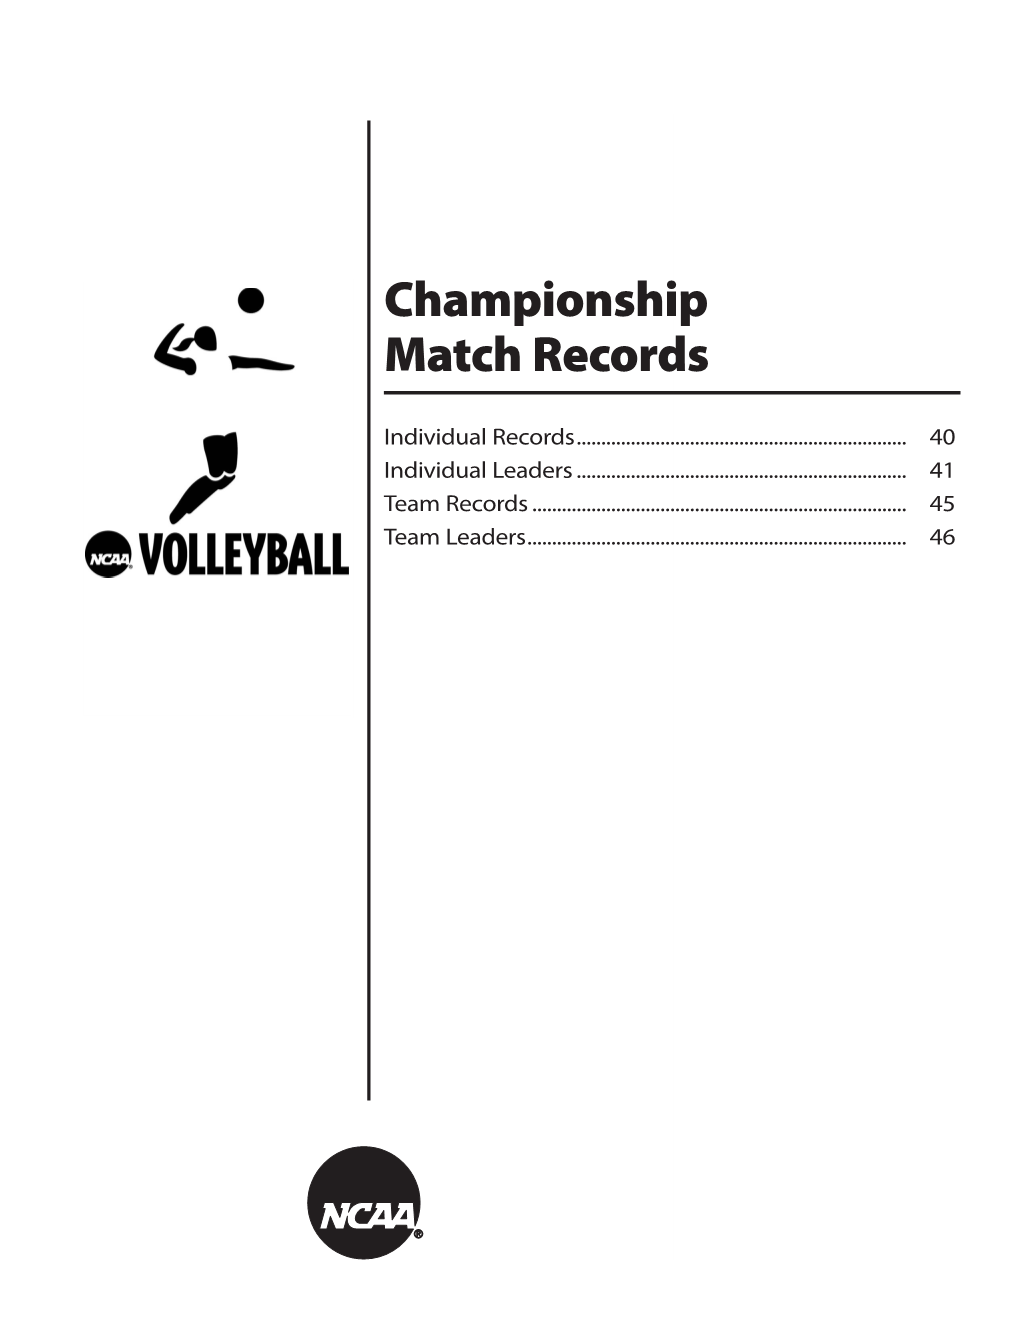 Championship Match Records